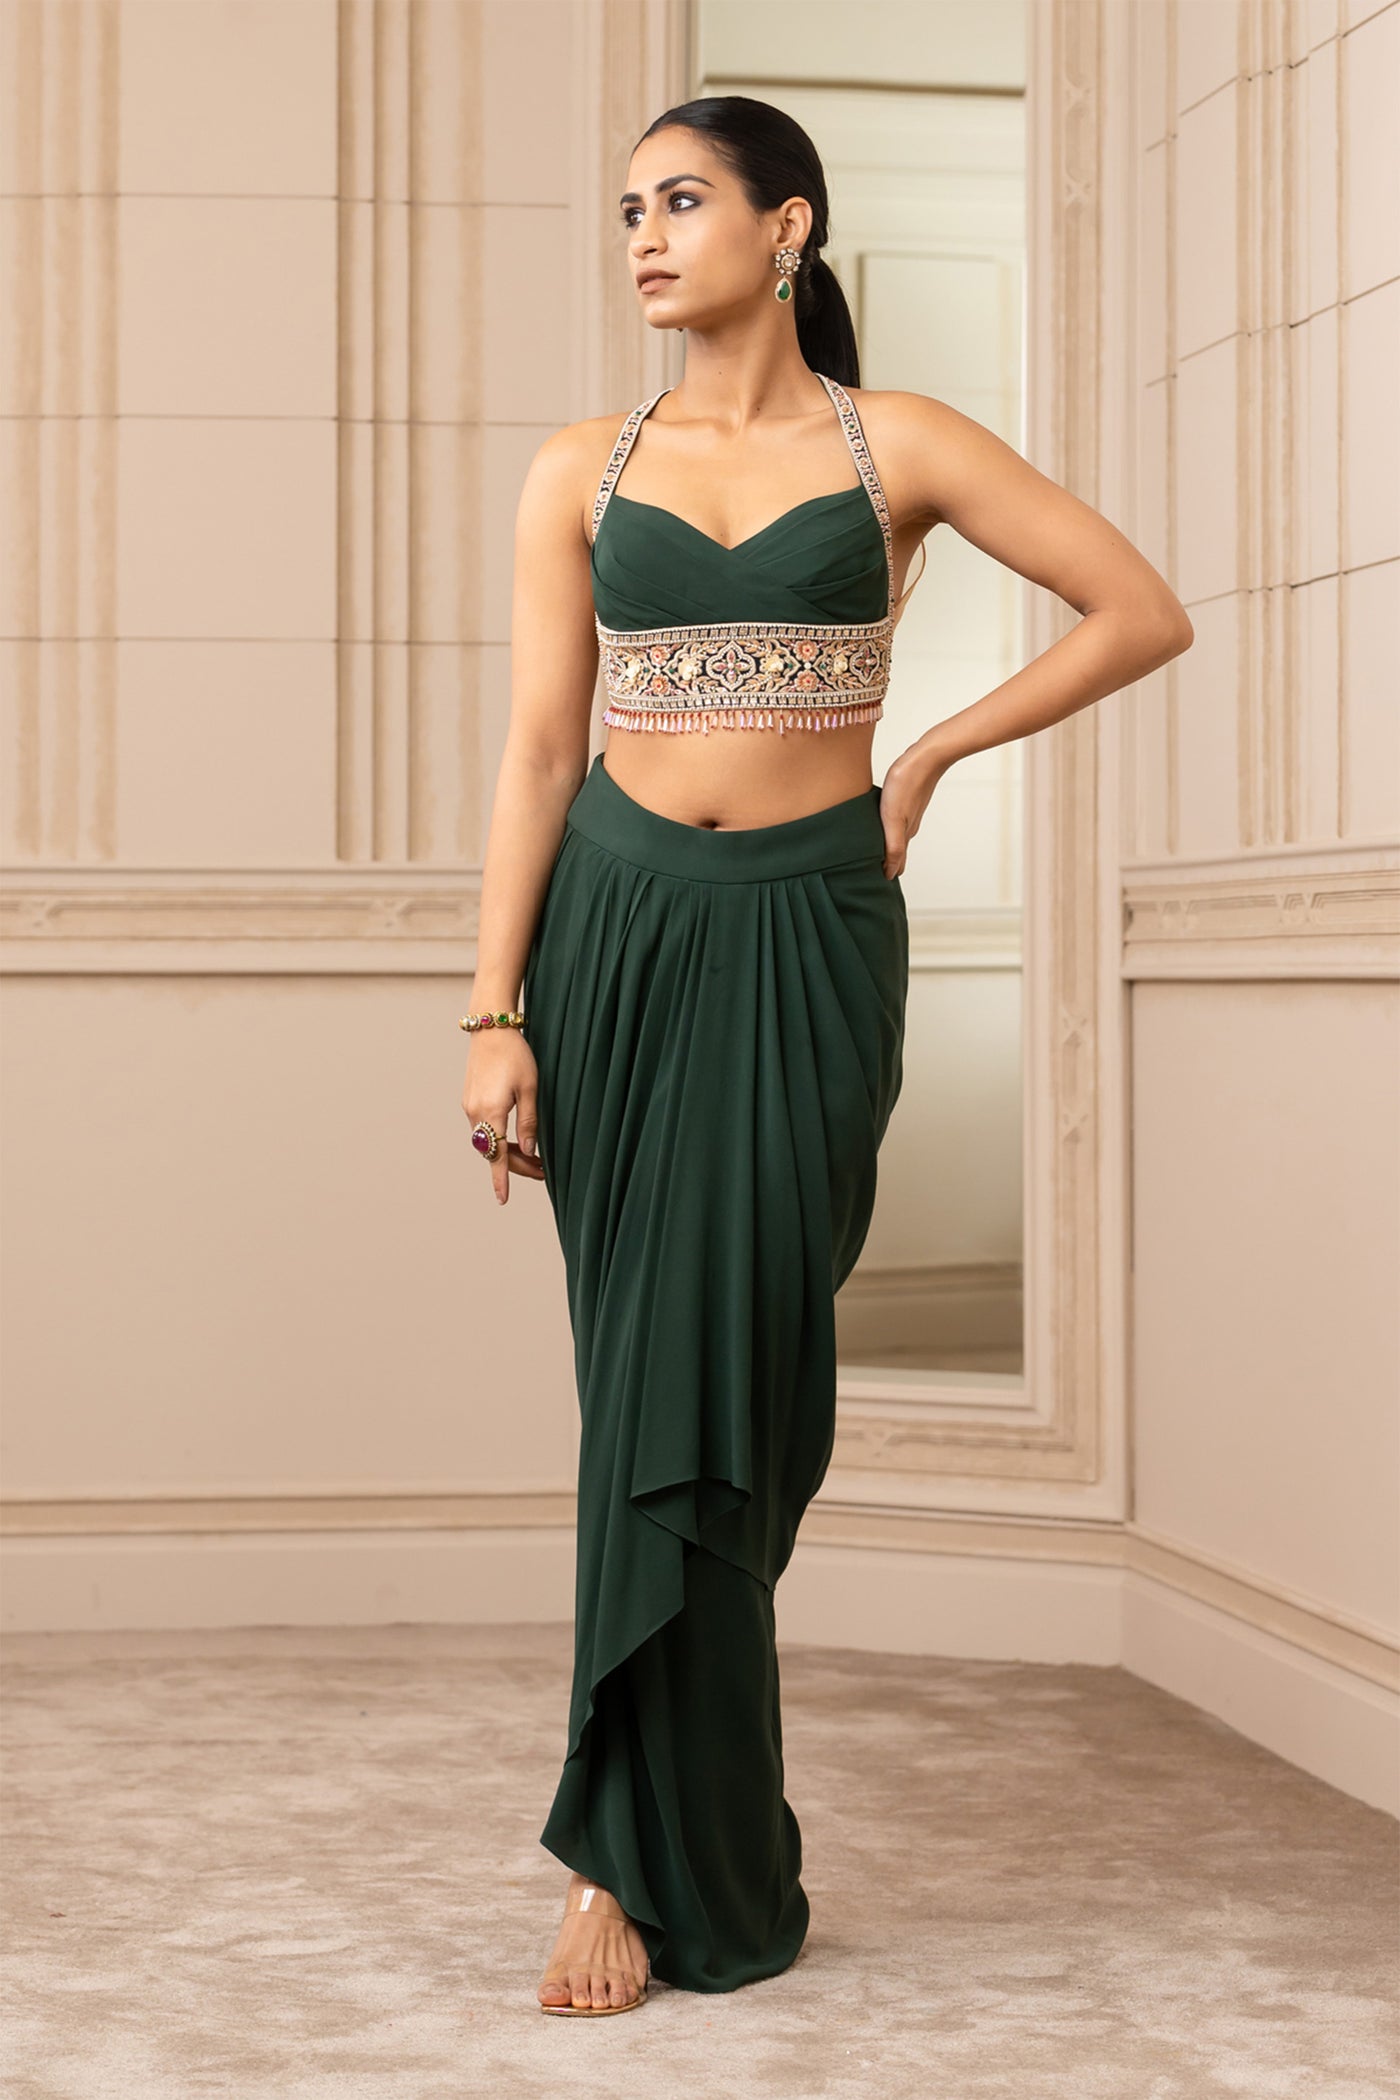 Tarun Tahiliani Ombré Printed Cape With Draped Skirt green fusion indian designer wear online shopping melange singapore